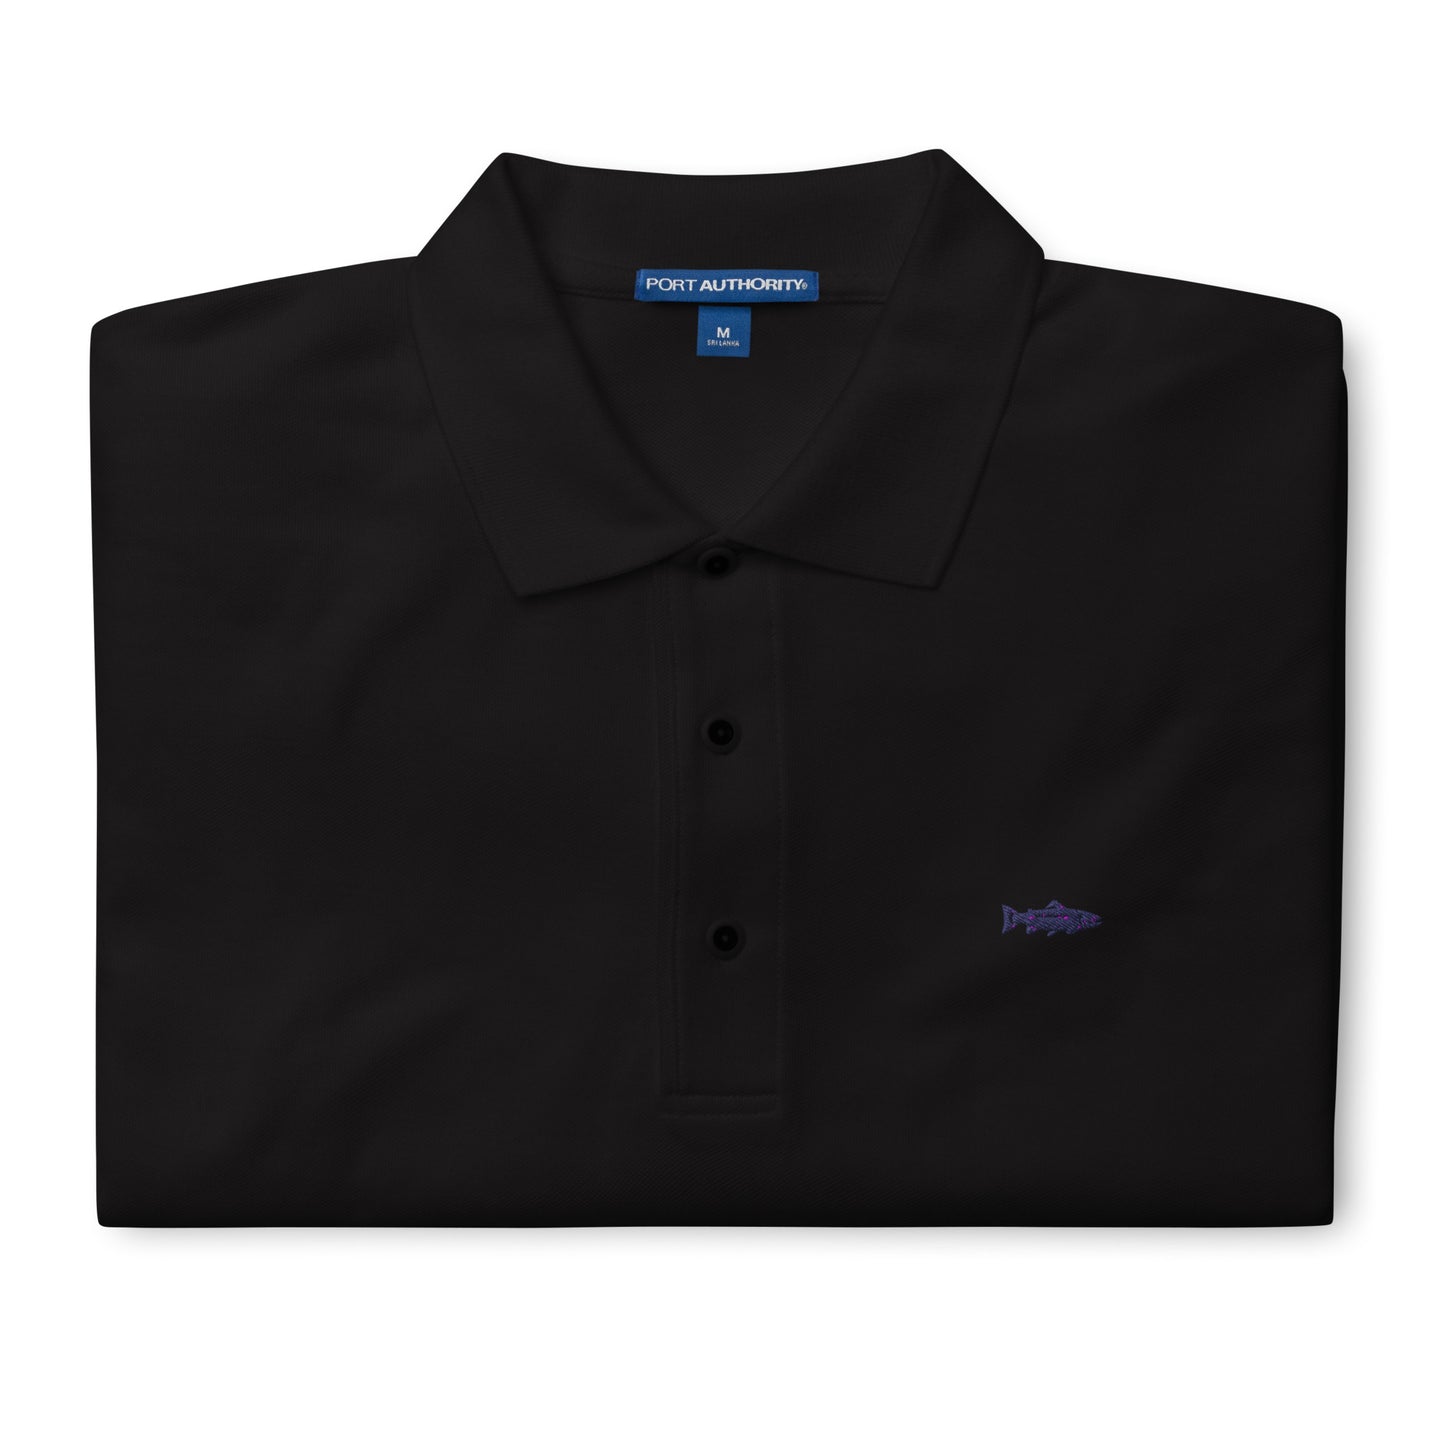 premium-polo-shirt-black